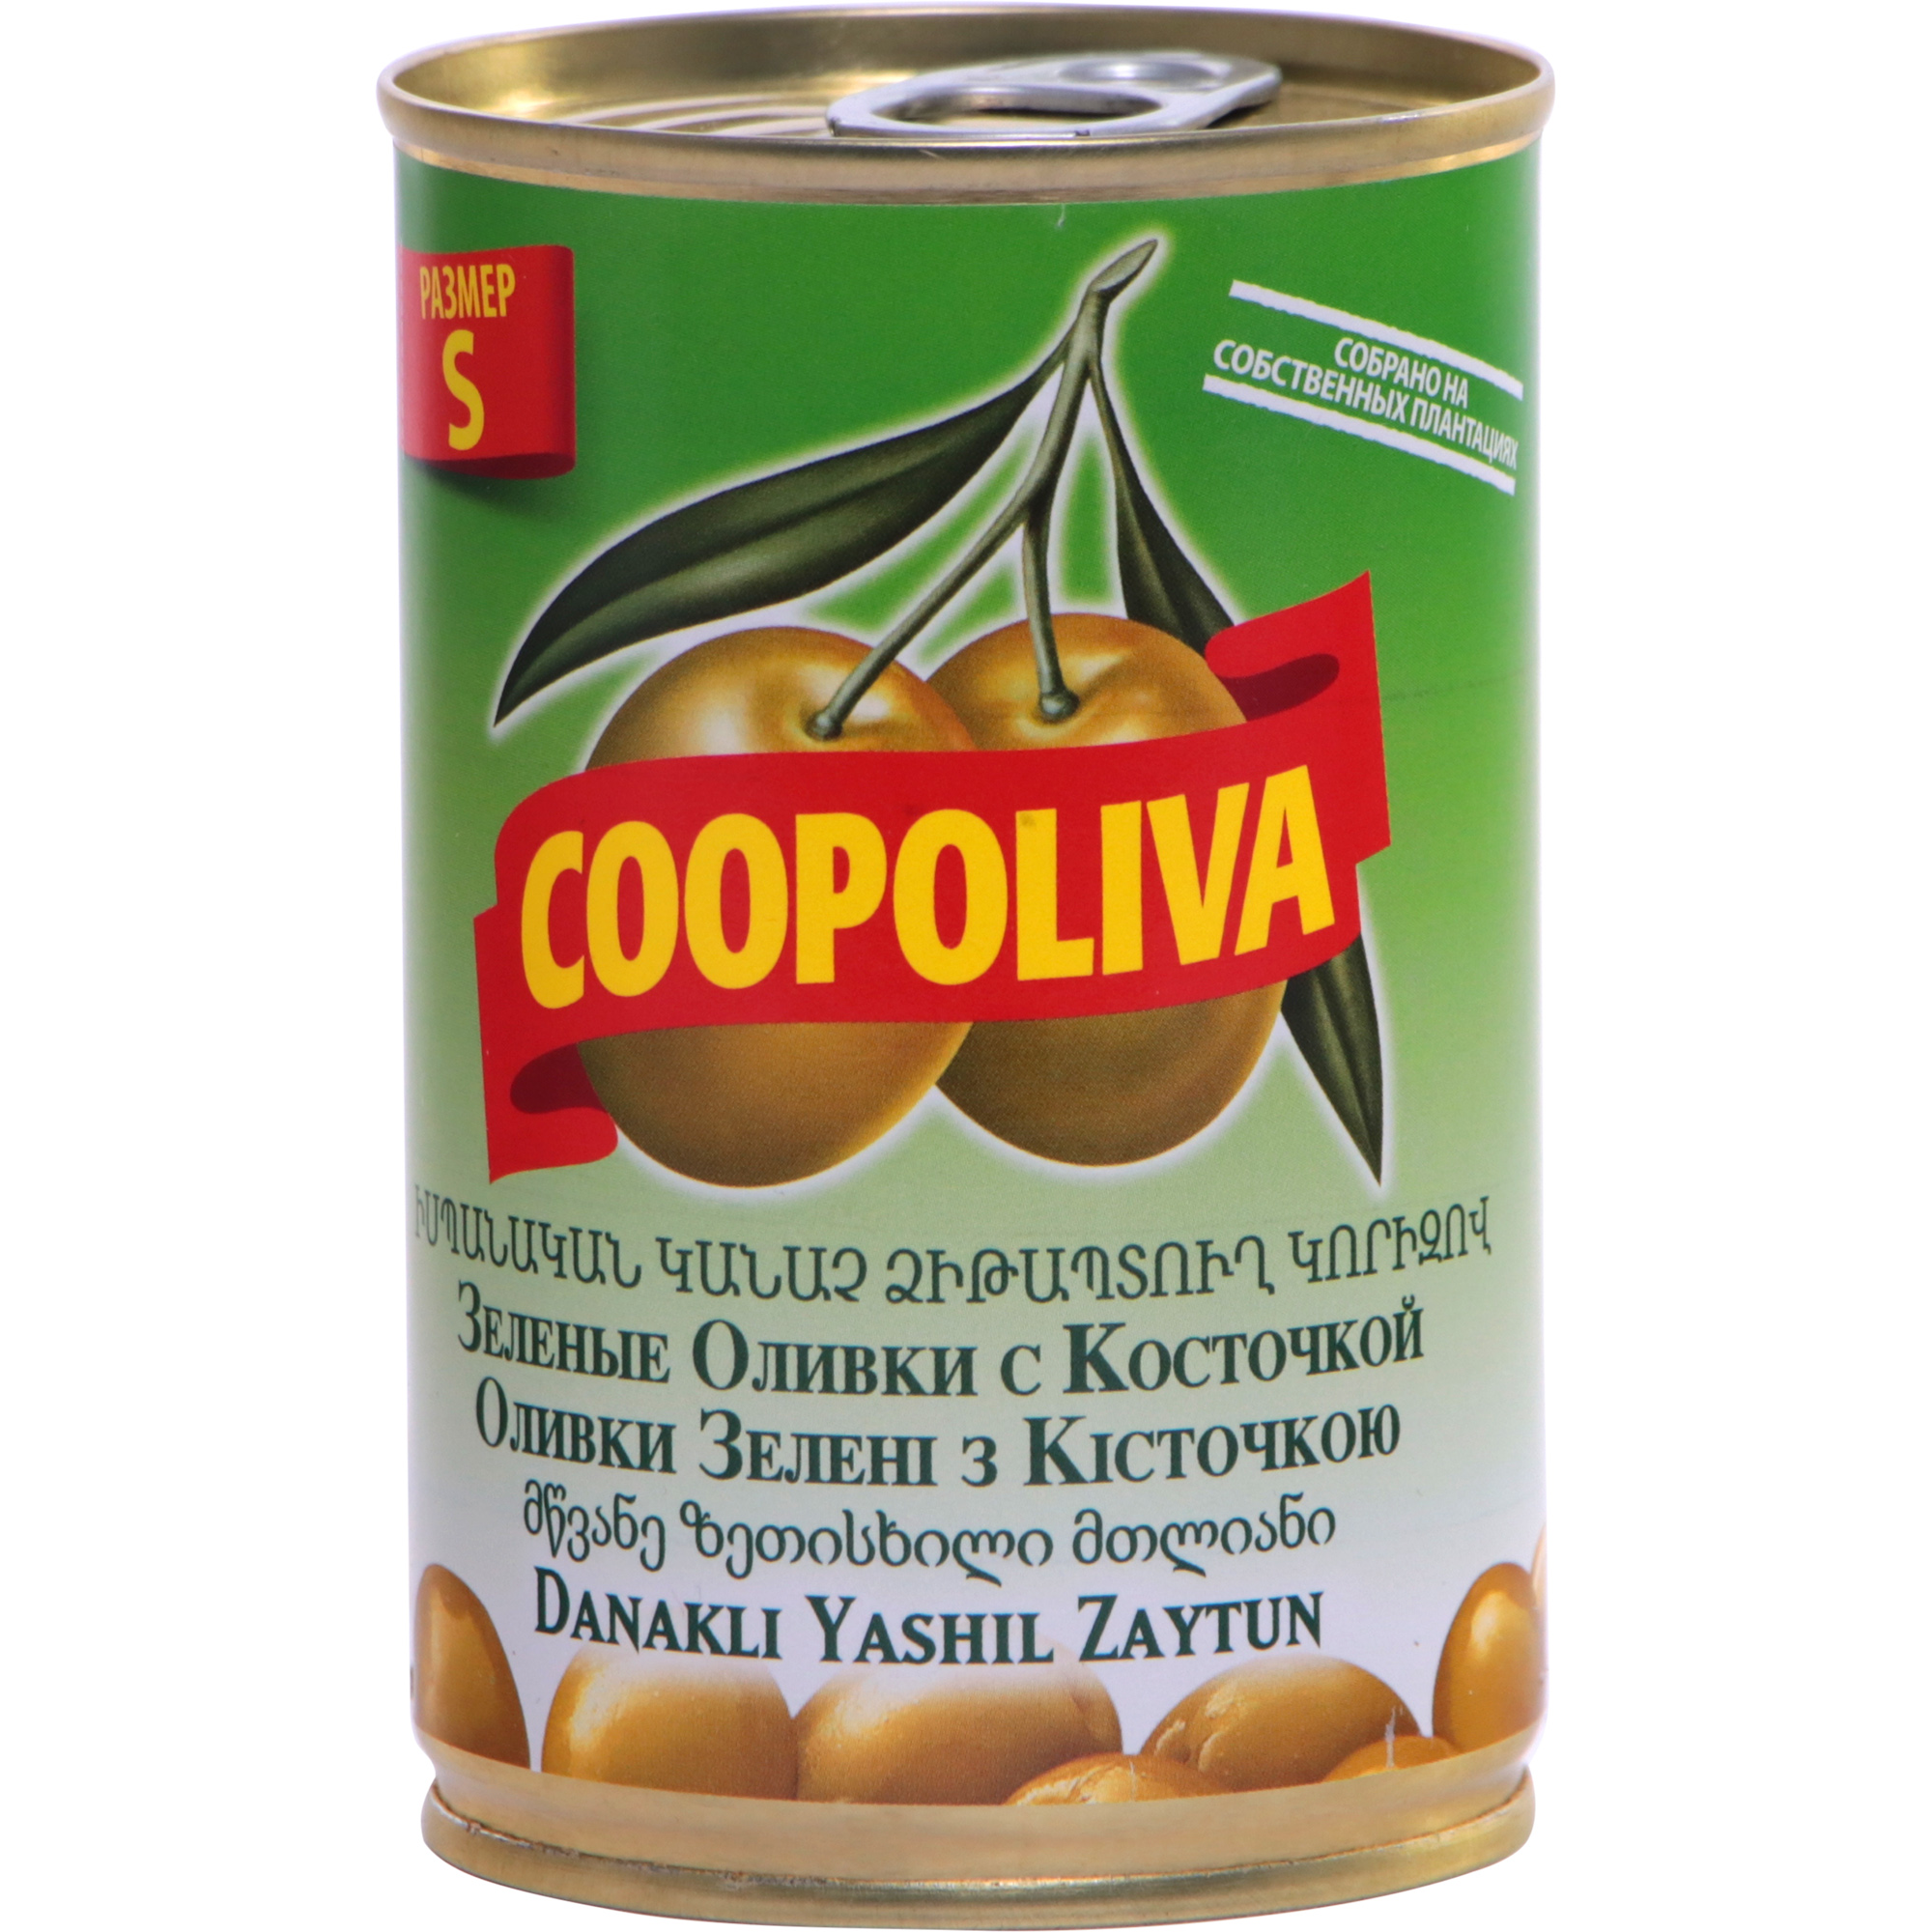 оливки coopoliva s без косточки 300 г Оливки COOPOLIVA S с косточкой, 300 г